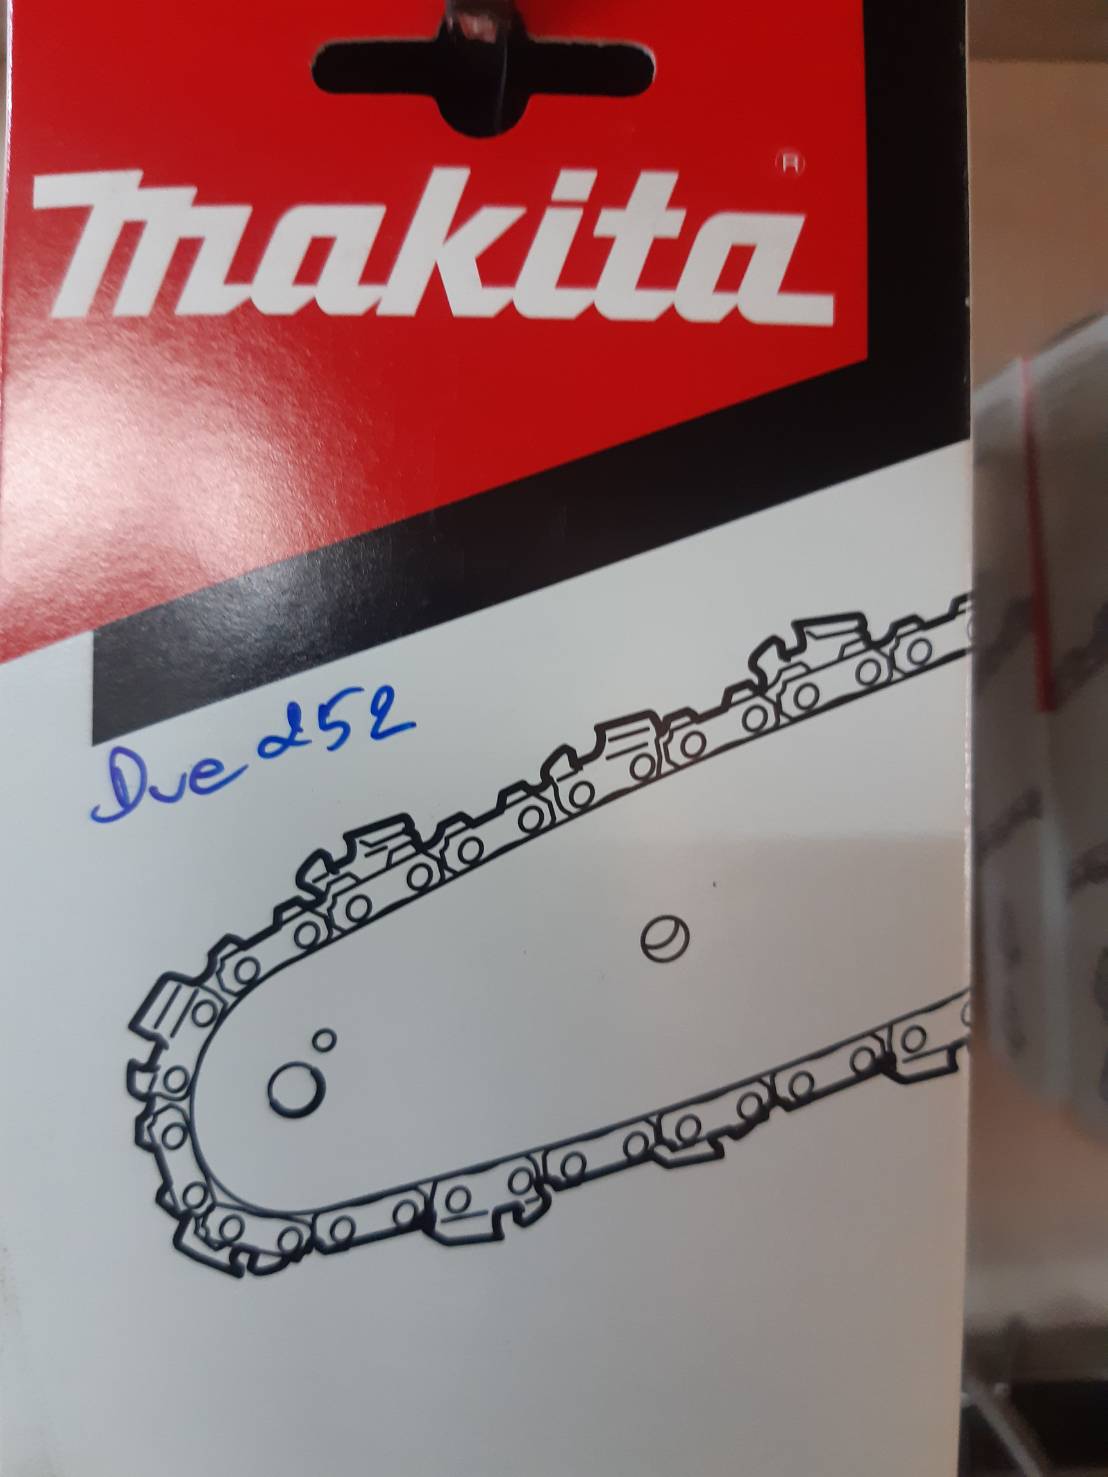 Makitaโซ่ เลื่อยโซ่ 10 MAKITA No.196205-9 ใช้กับรุ่น DUC252 ตัวโซ่เดิมๆ จากกล่อง ยี่ห้อ OREGON จากศูนย์ASP